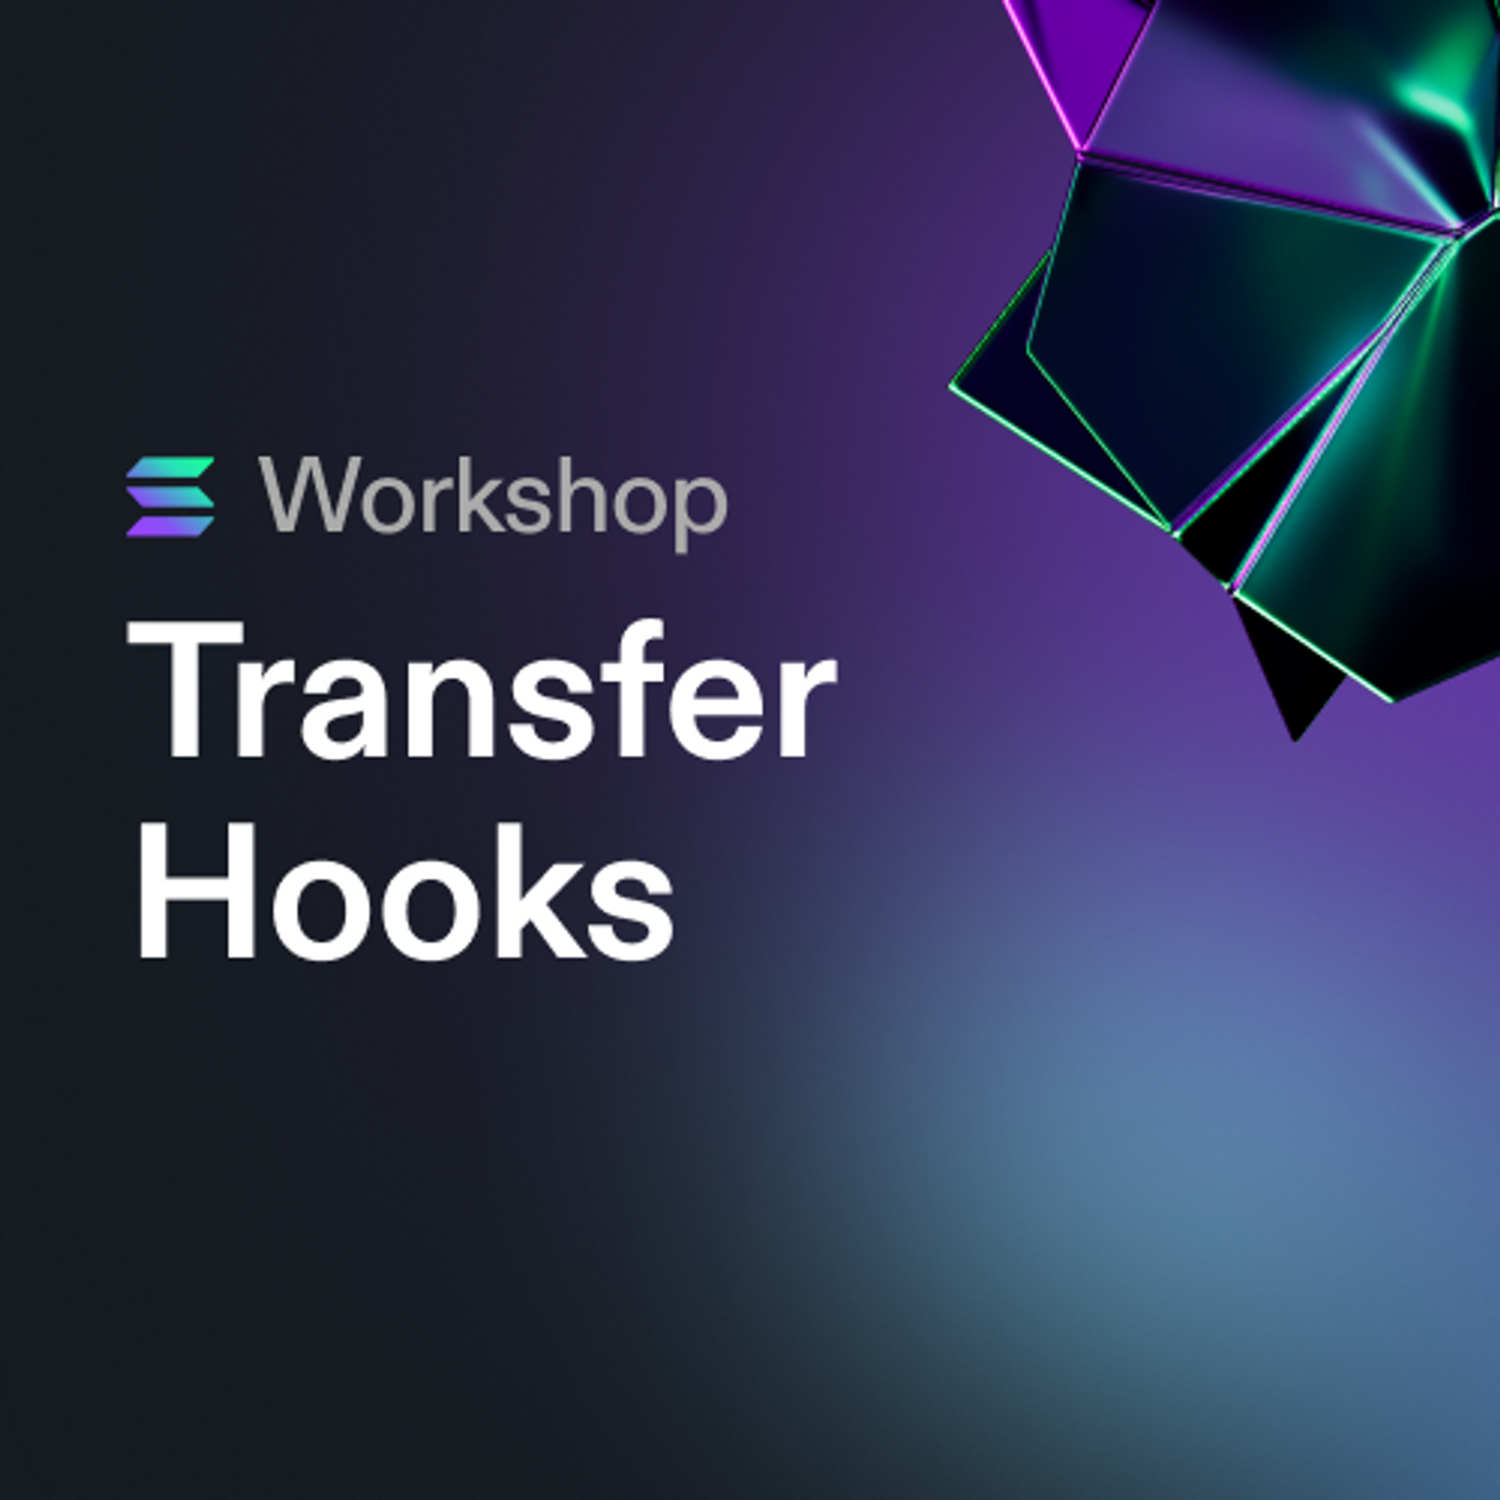 Transfer Hooks Workshop